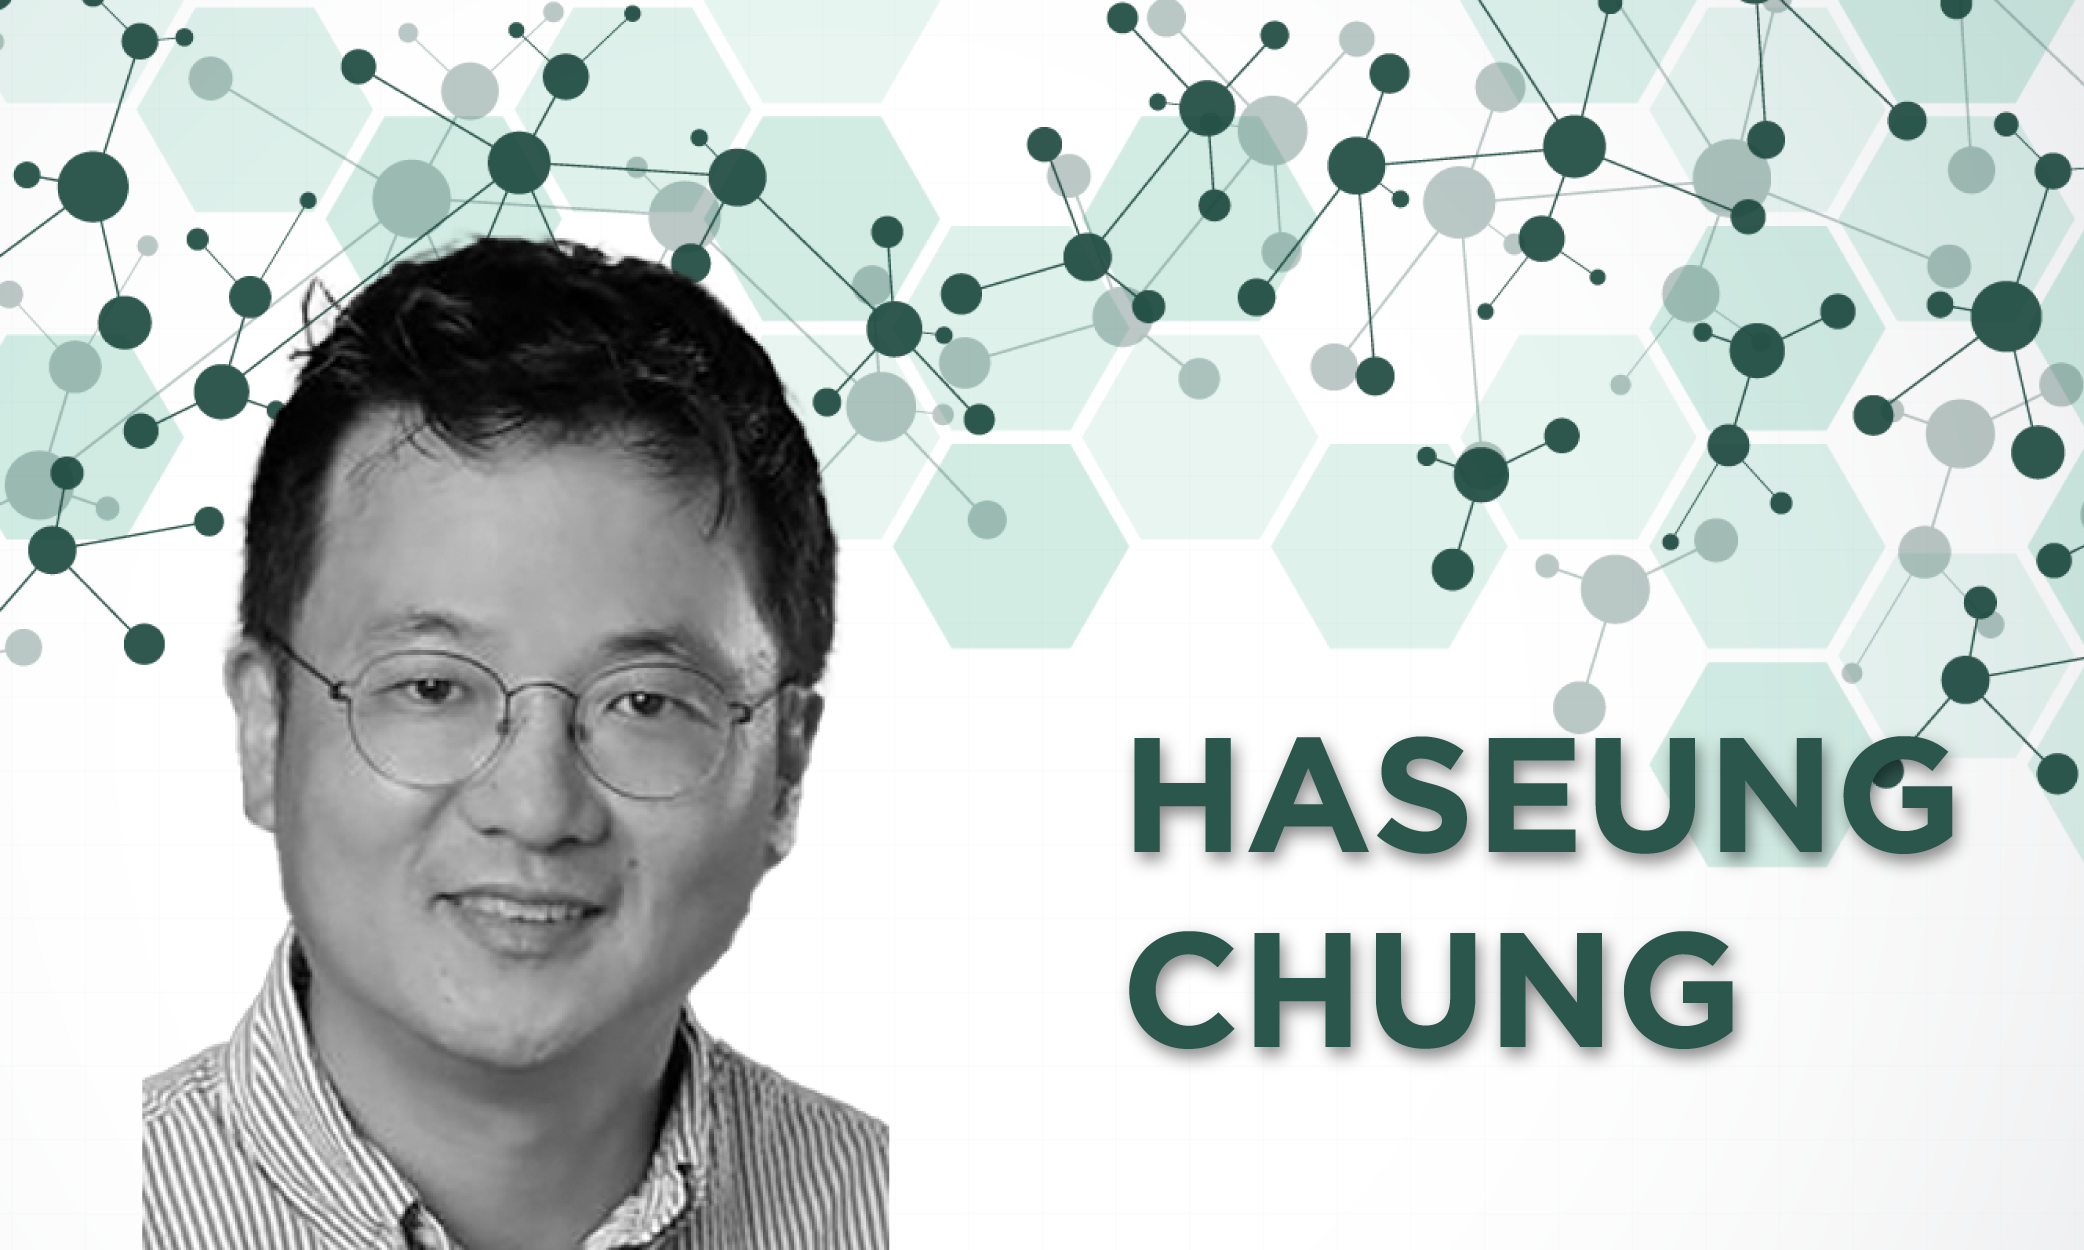 Haesung Chung